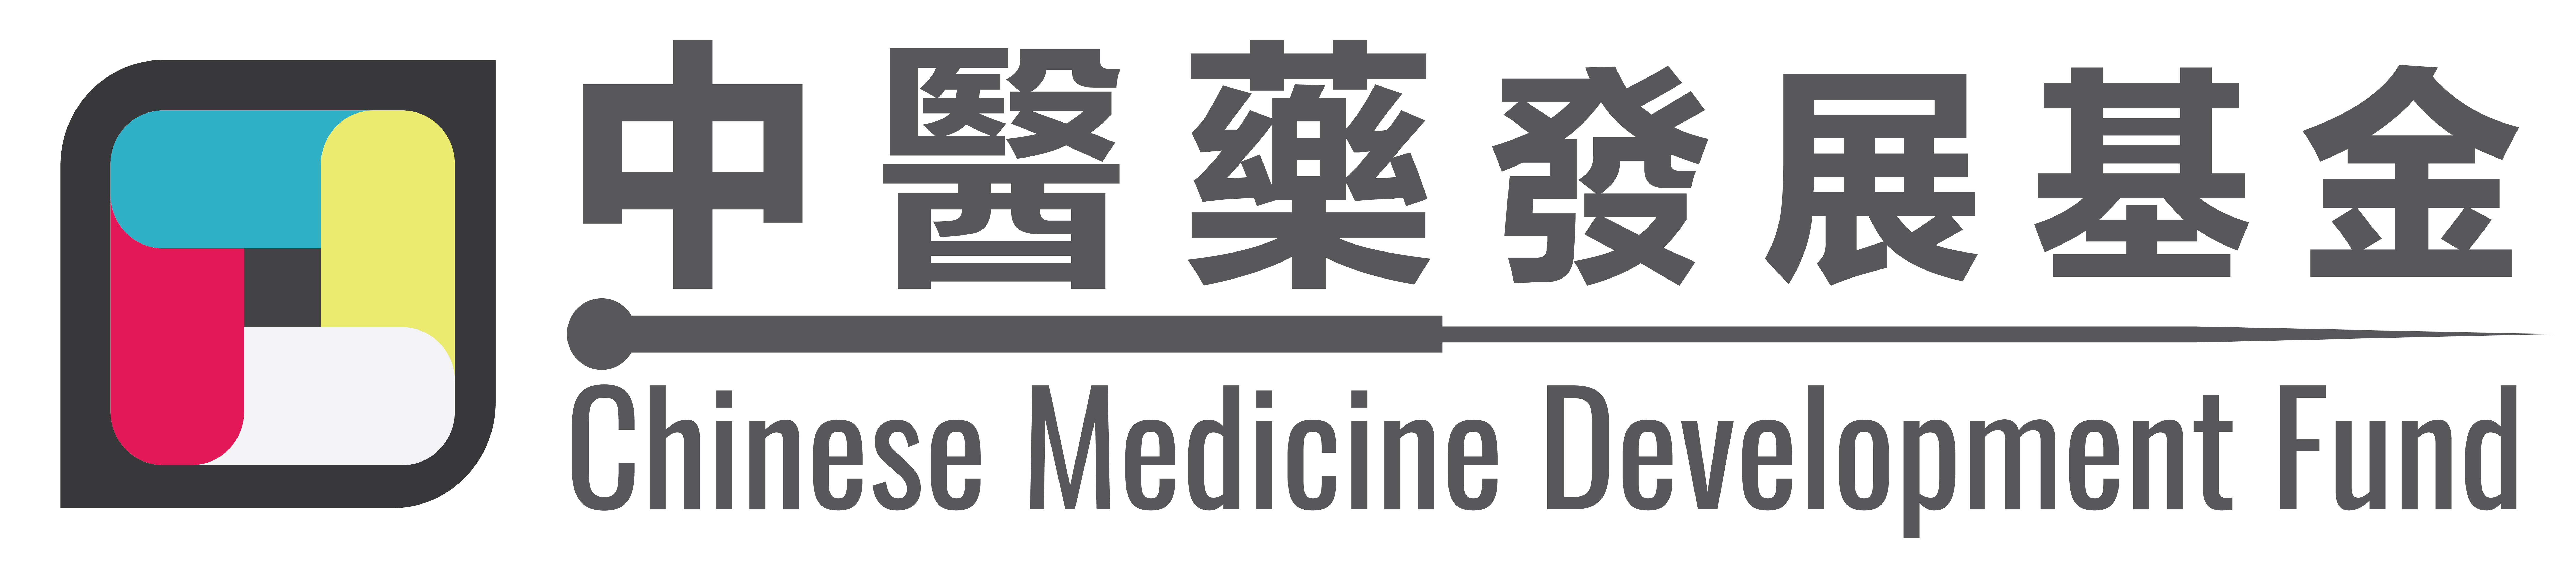 CMDF logo cfm 02072019